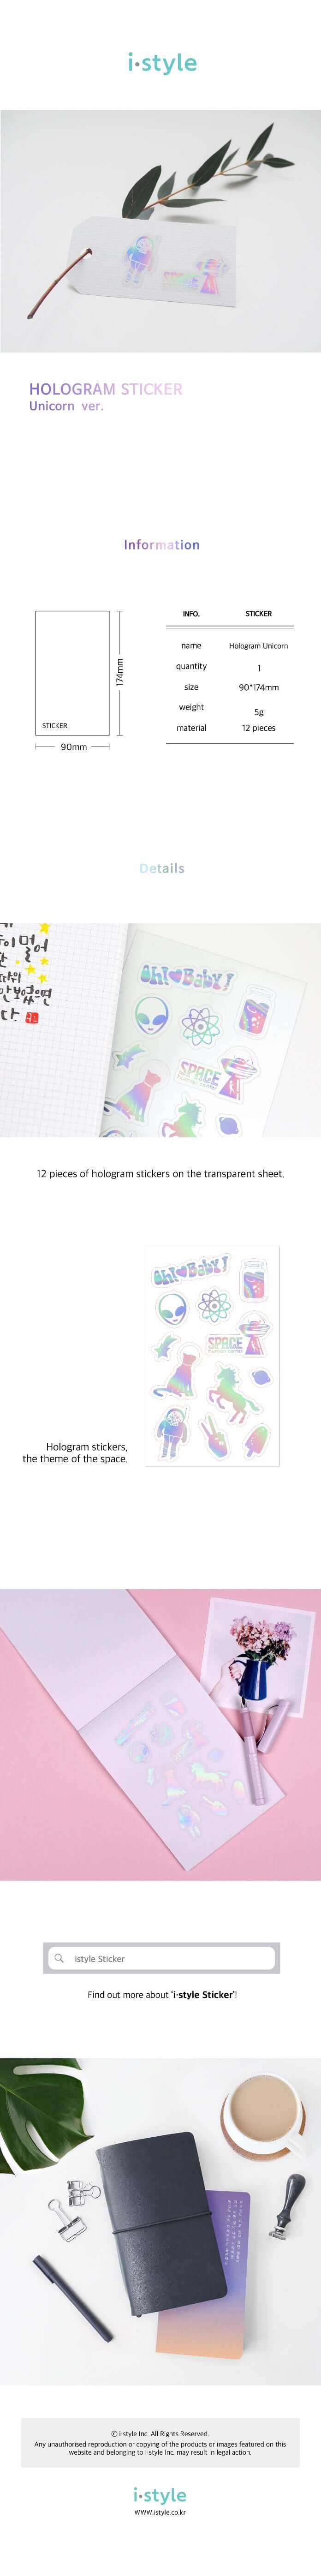 Shil Note Hologram Sticker (Unicorn)